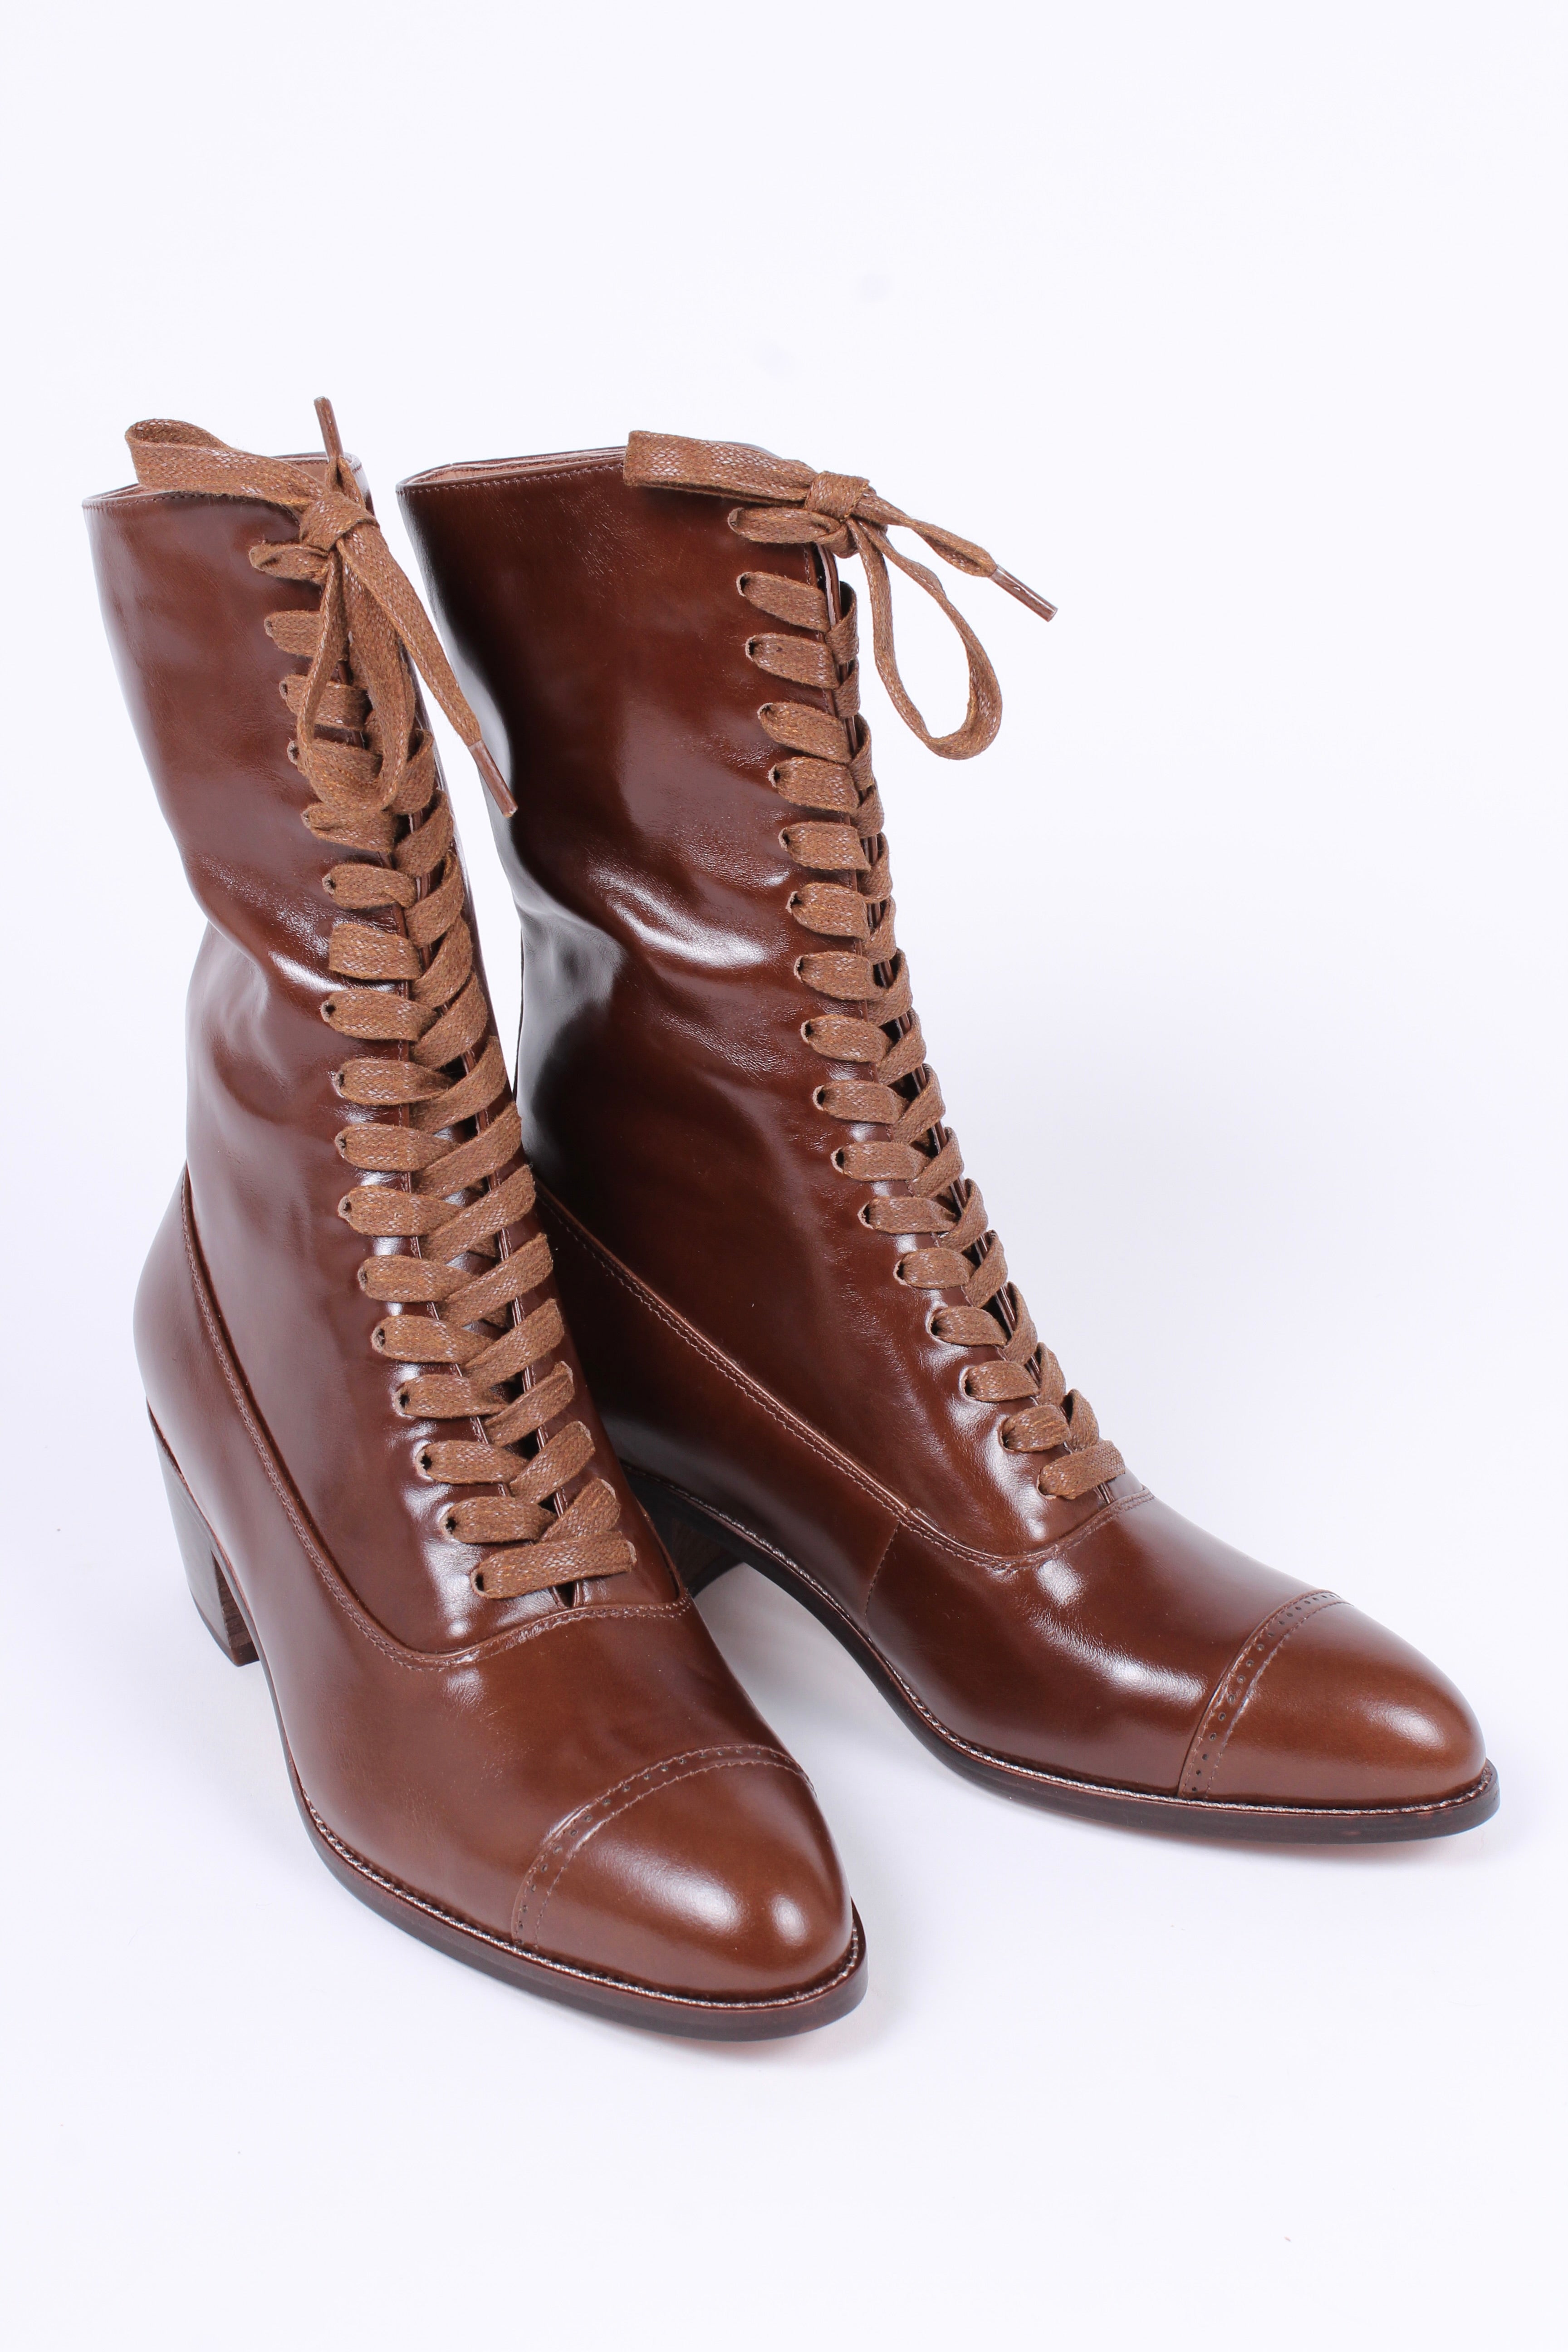 Edwardian everyday walking boot, 1910 - brown - Alice